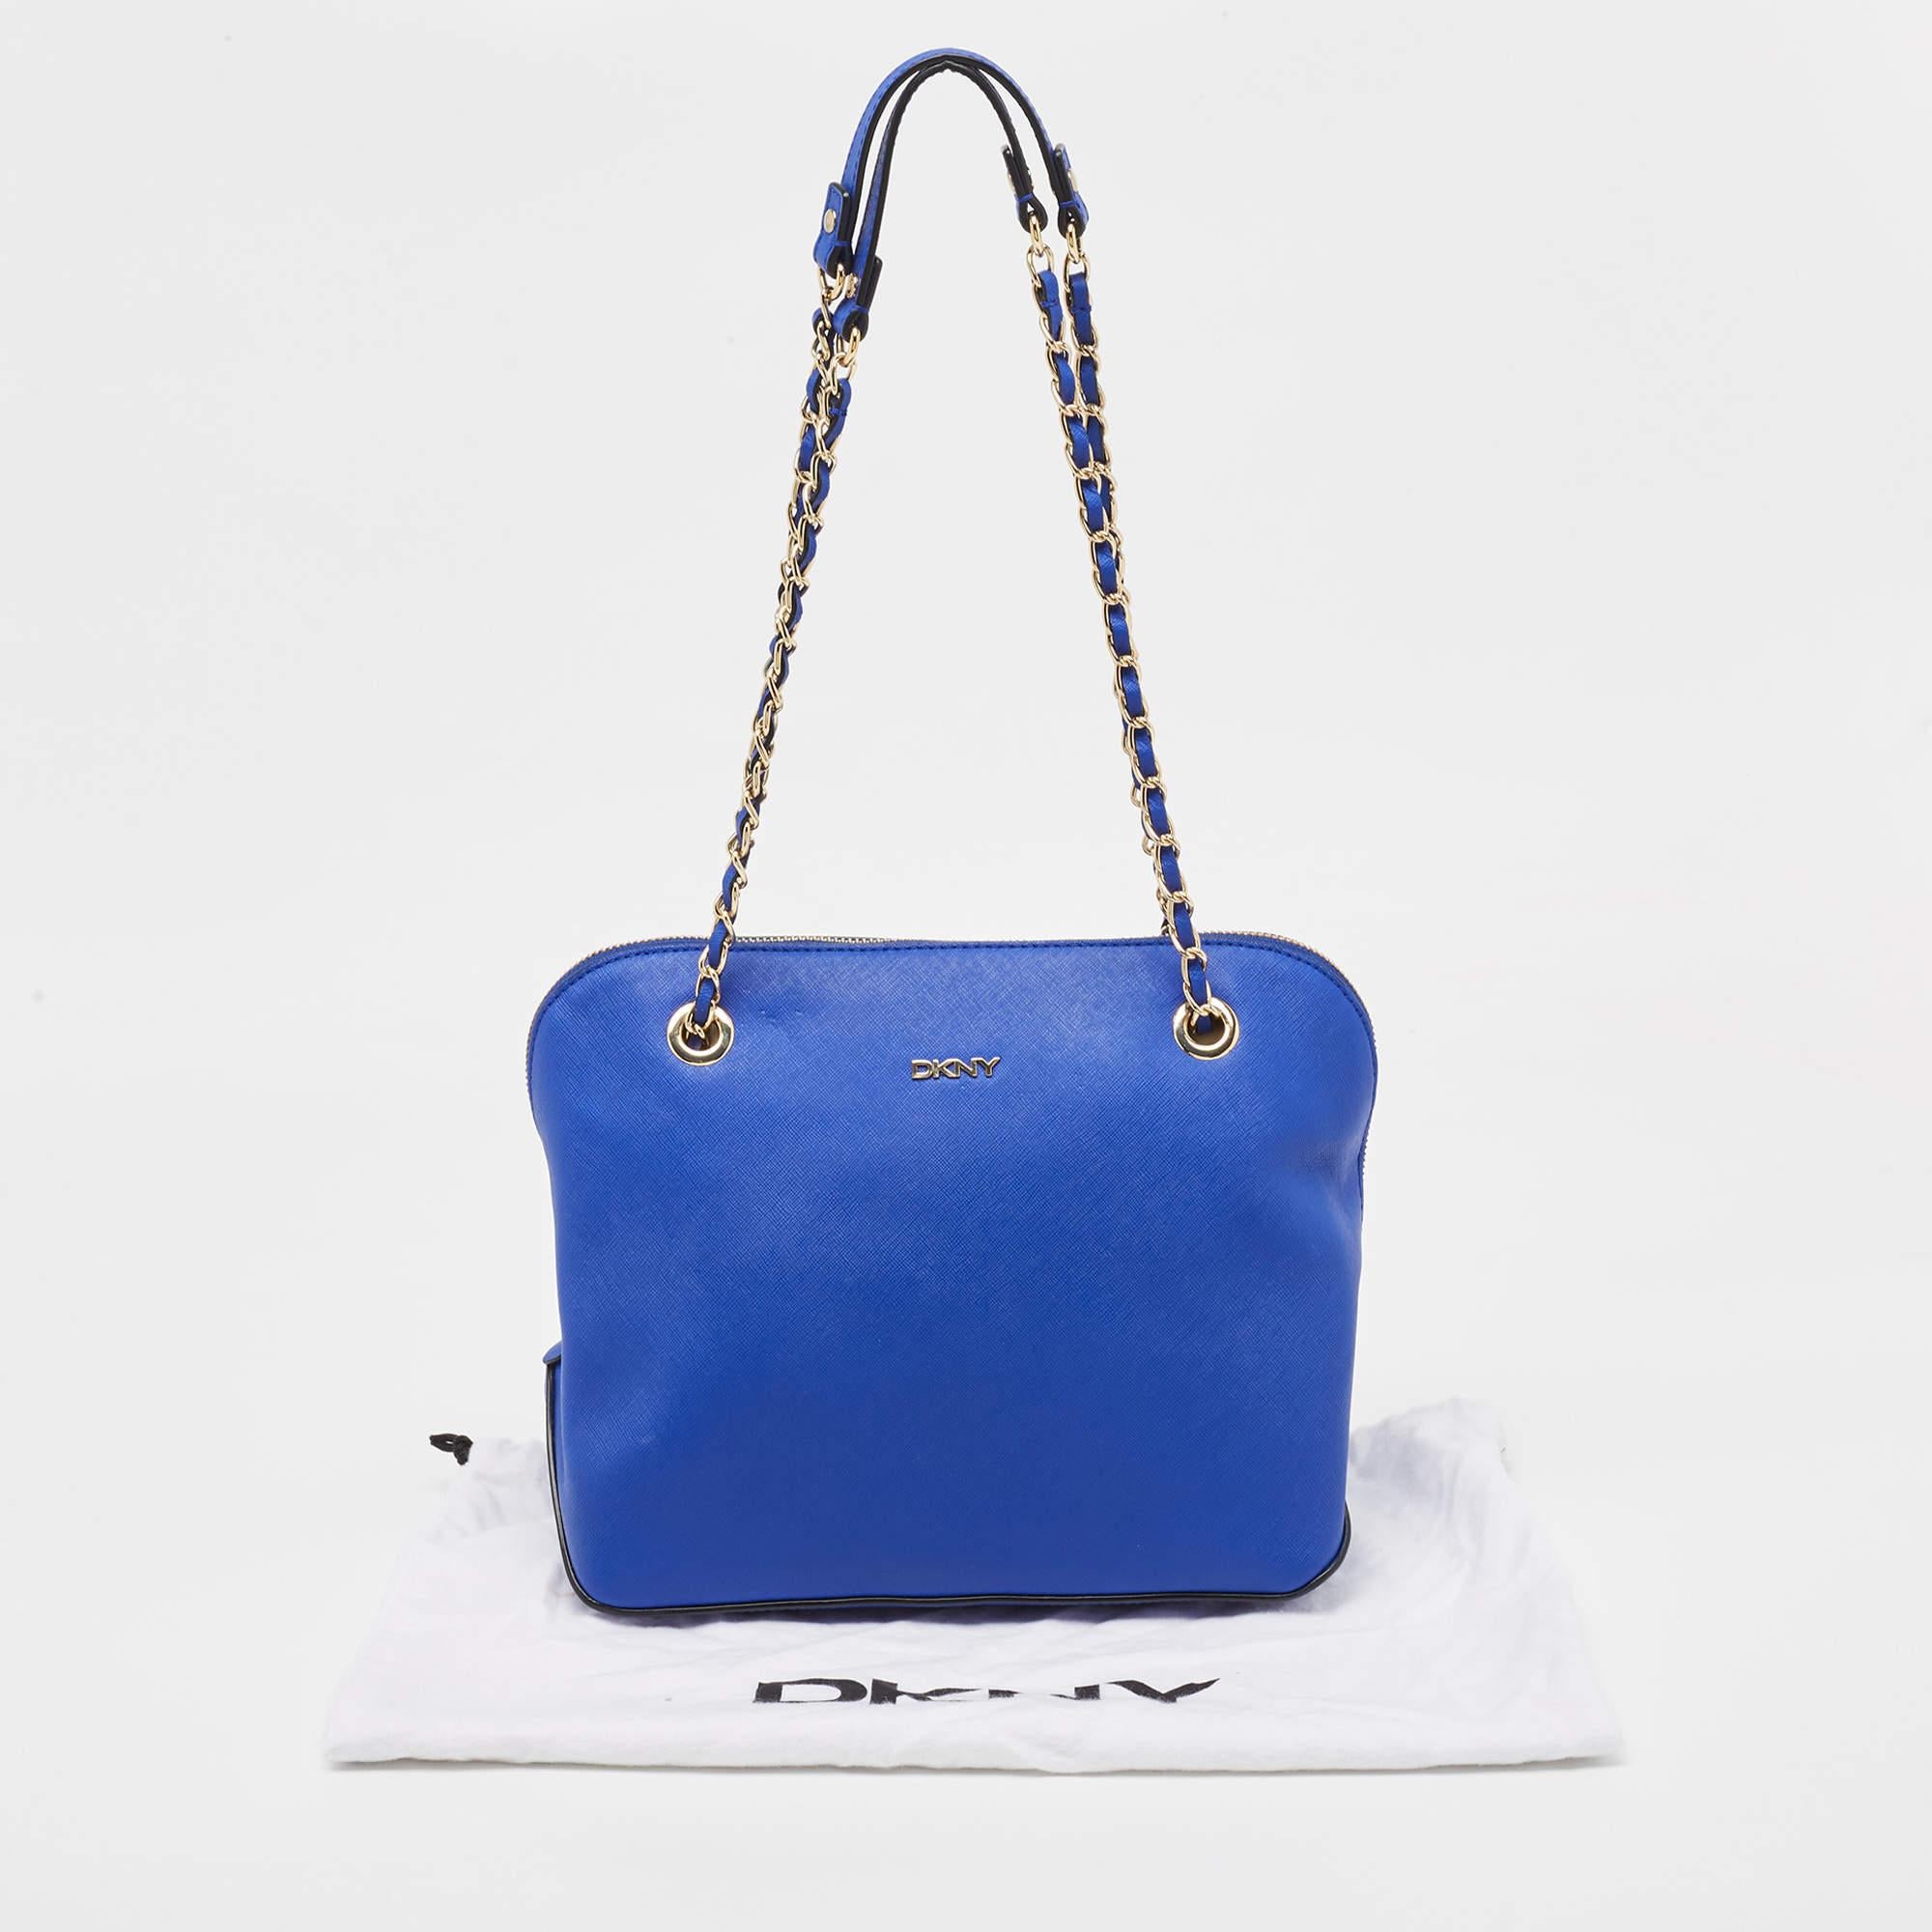 Dkny Blue Saffiano Leather Dome Shoulder Bag 12